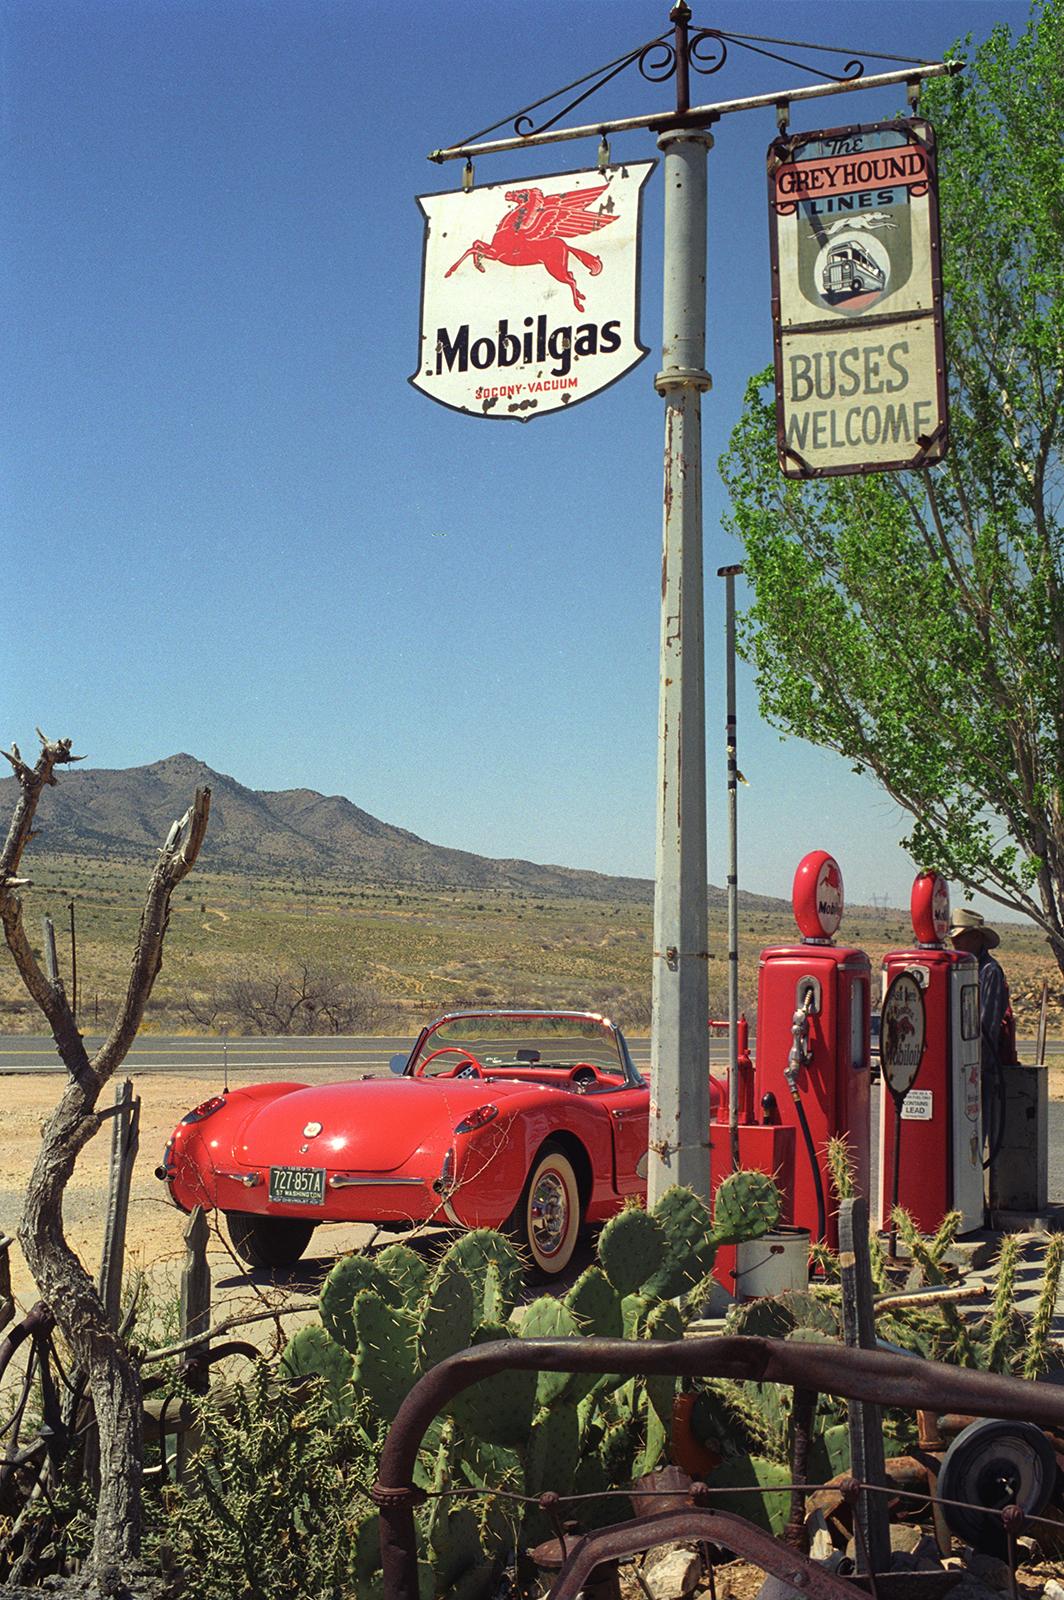 Geoff Halpin Landscape Photograph - Corvette in the desert - Signed limited edition archival pigment print, USA